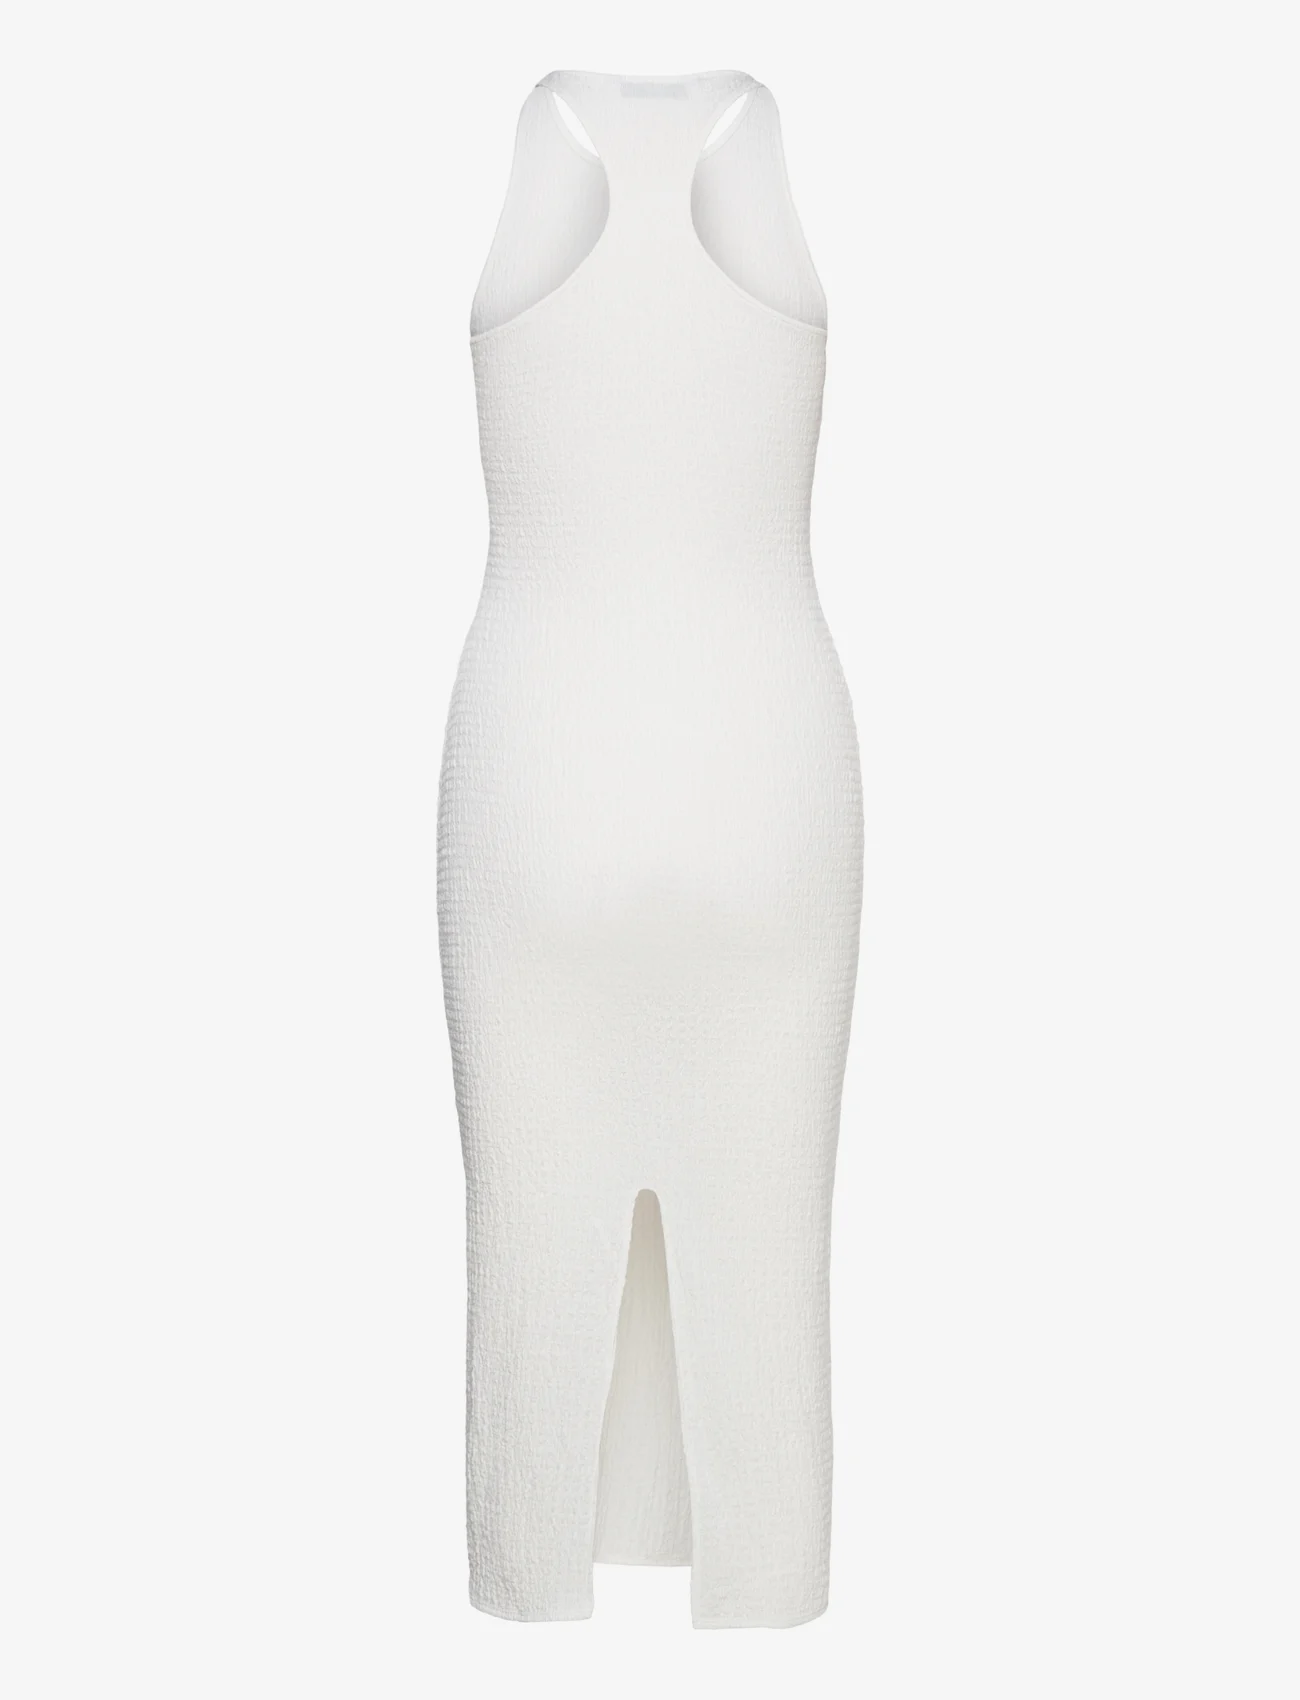 Mango - Textured dress with opening - sommerkleider - natural white - 1